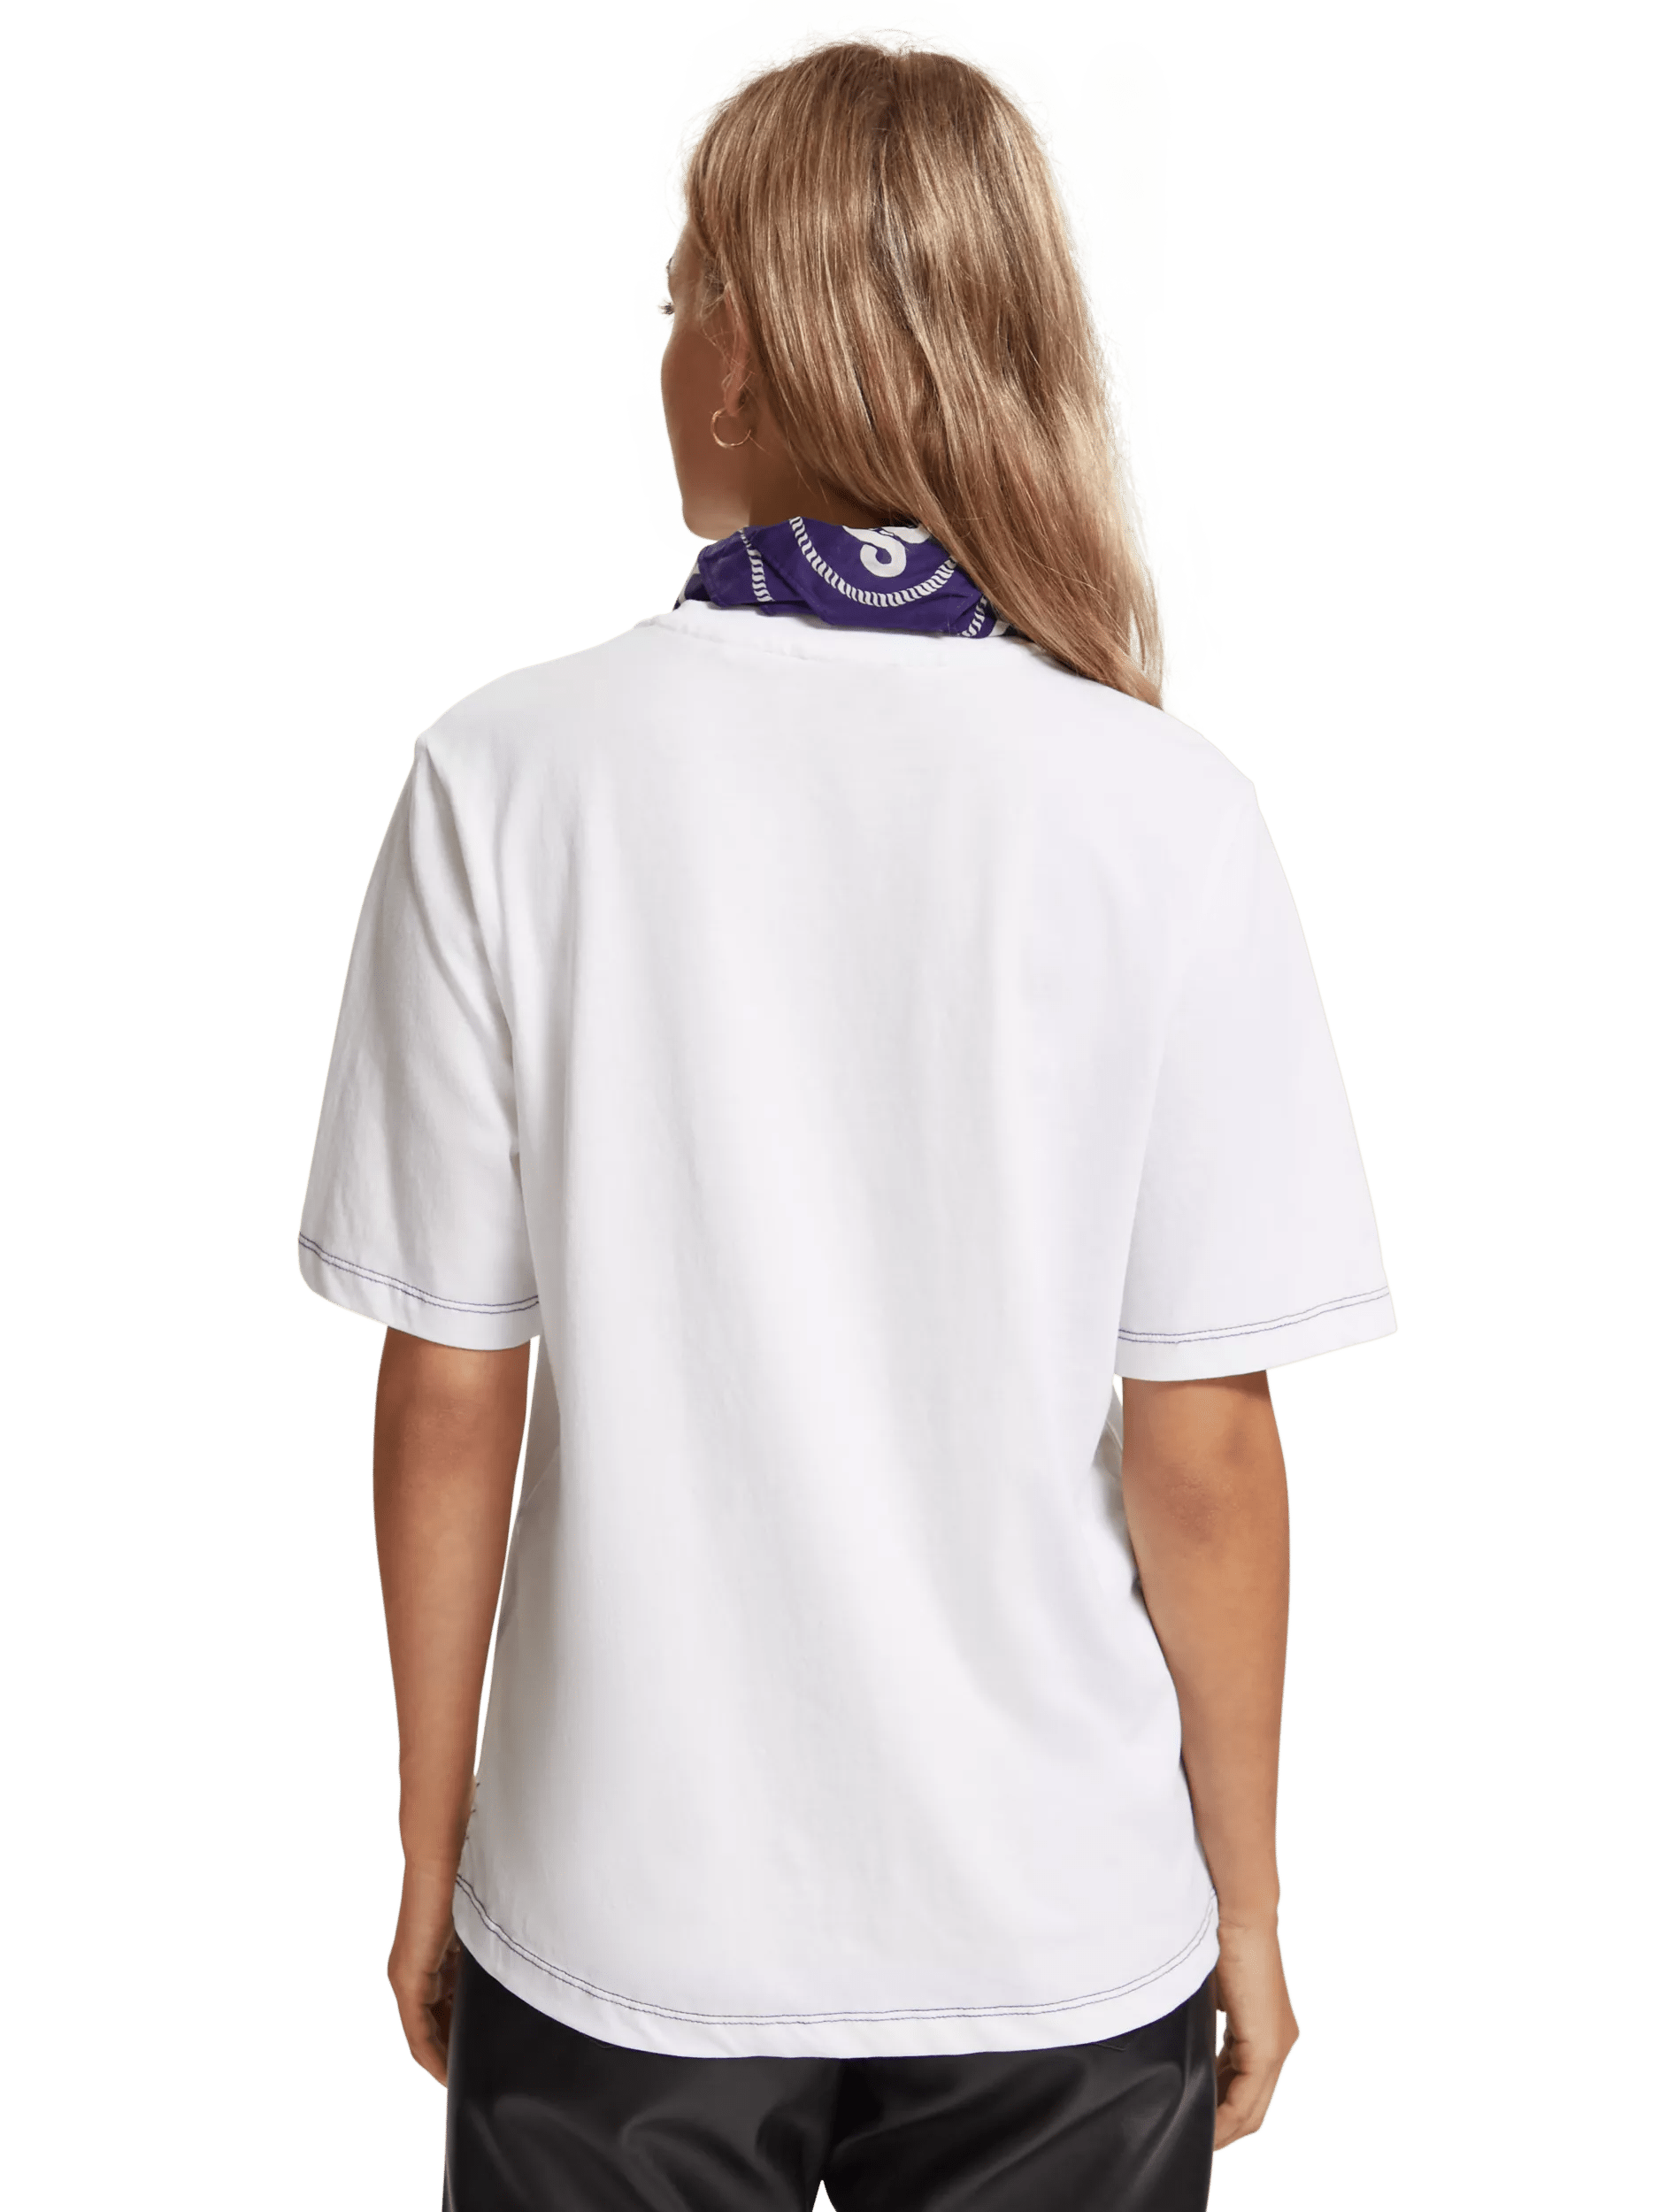 Scotch & Soda T-shirt bandana coupe décontractée MDL-BCK